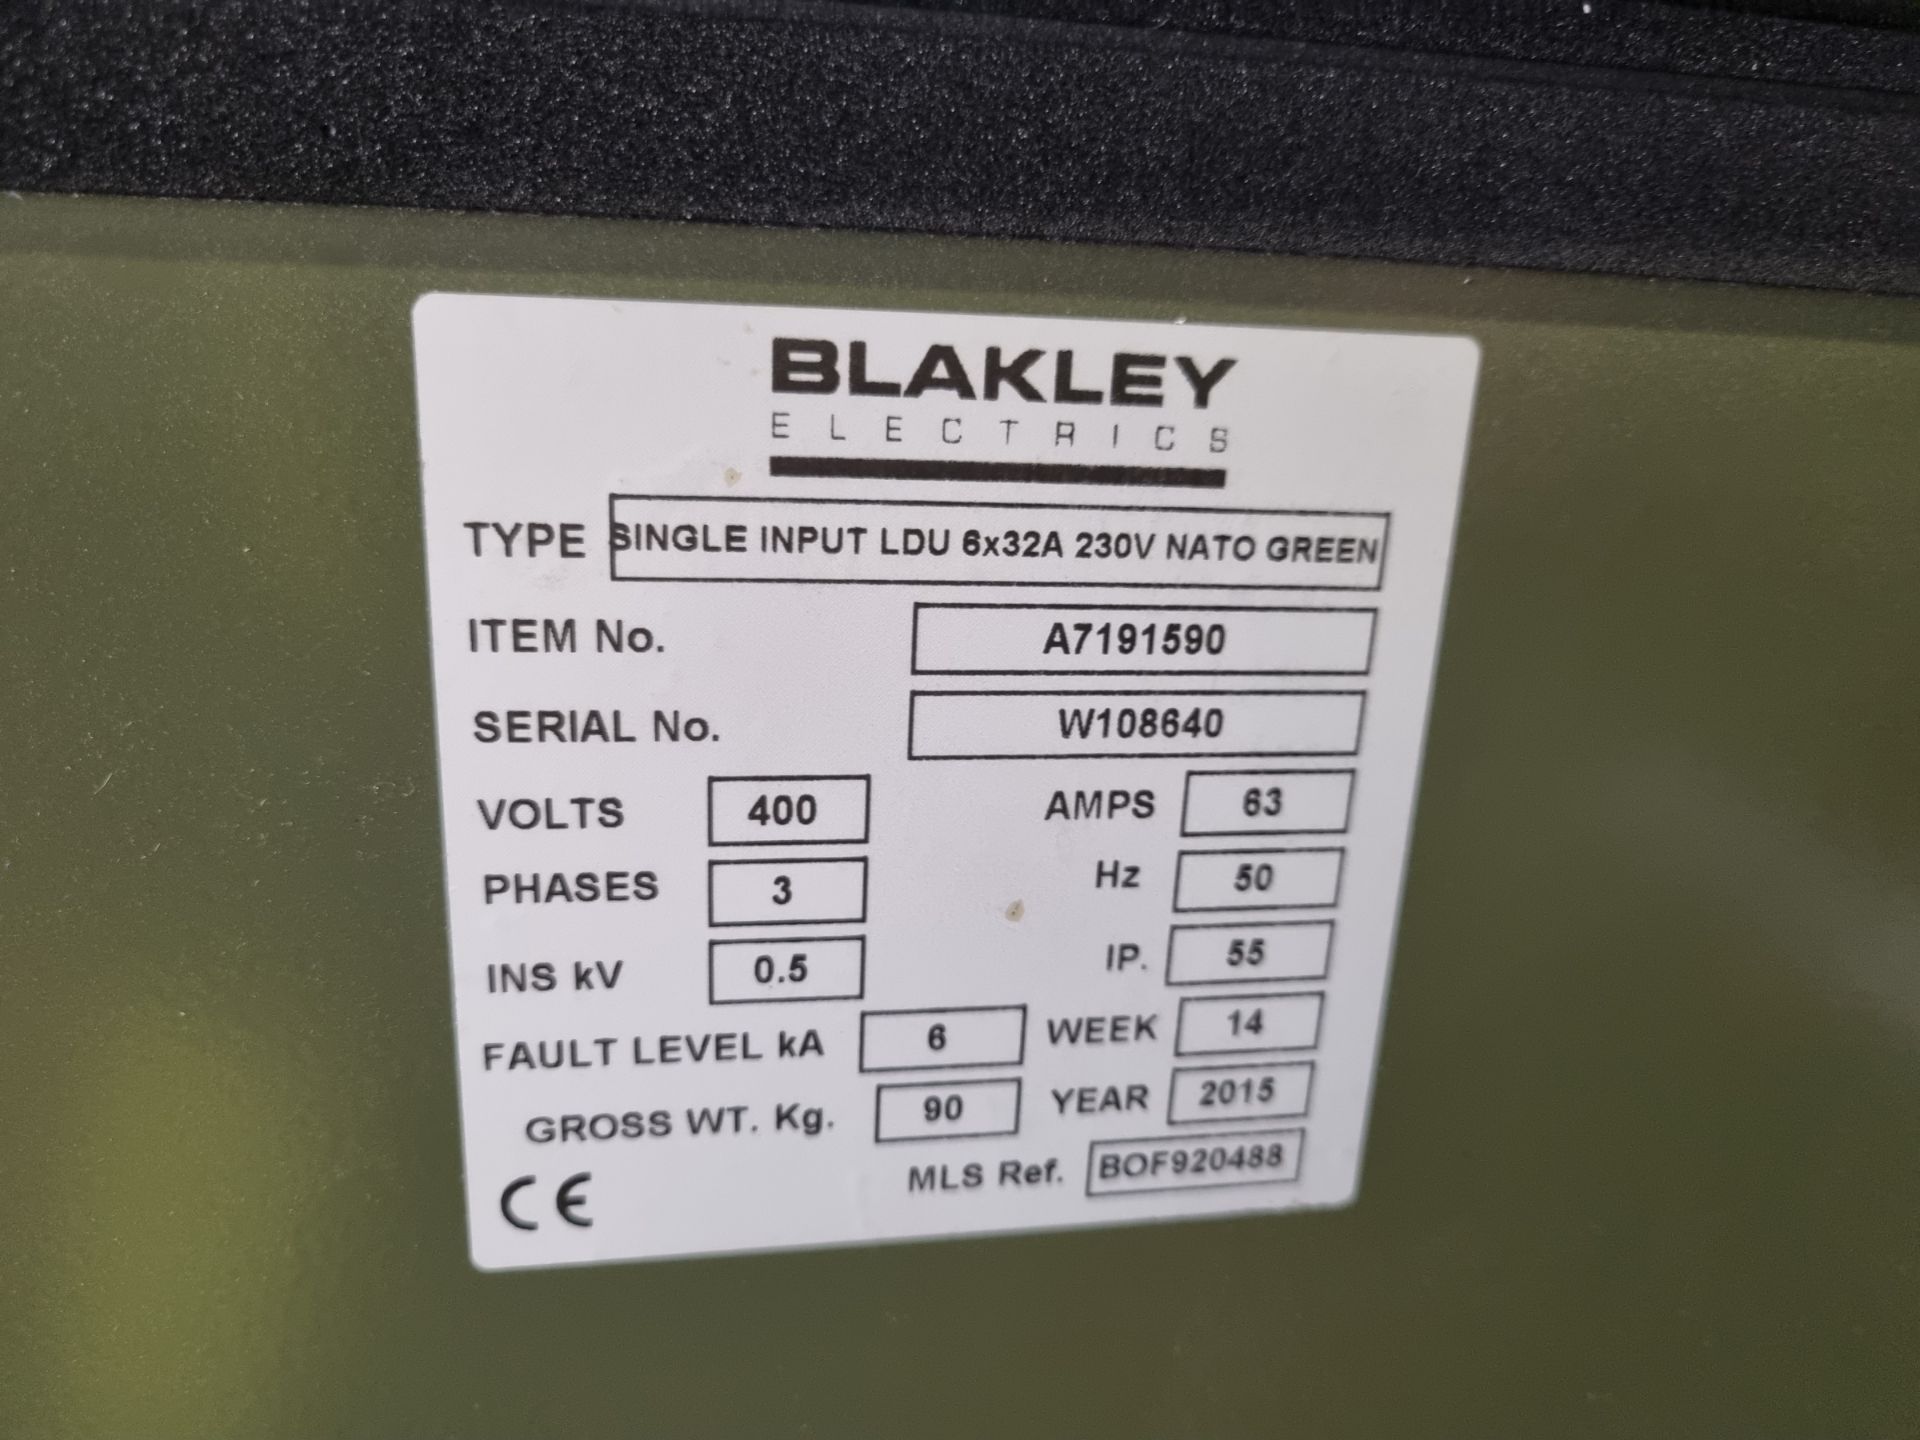 Blakley Electrics single input LDU 6x32A 230V Nato Green - 400V - 3 phase - 63A - 50hz - Image 8 of 9